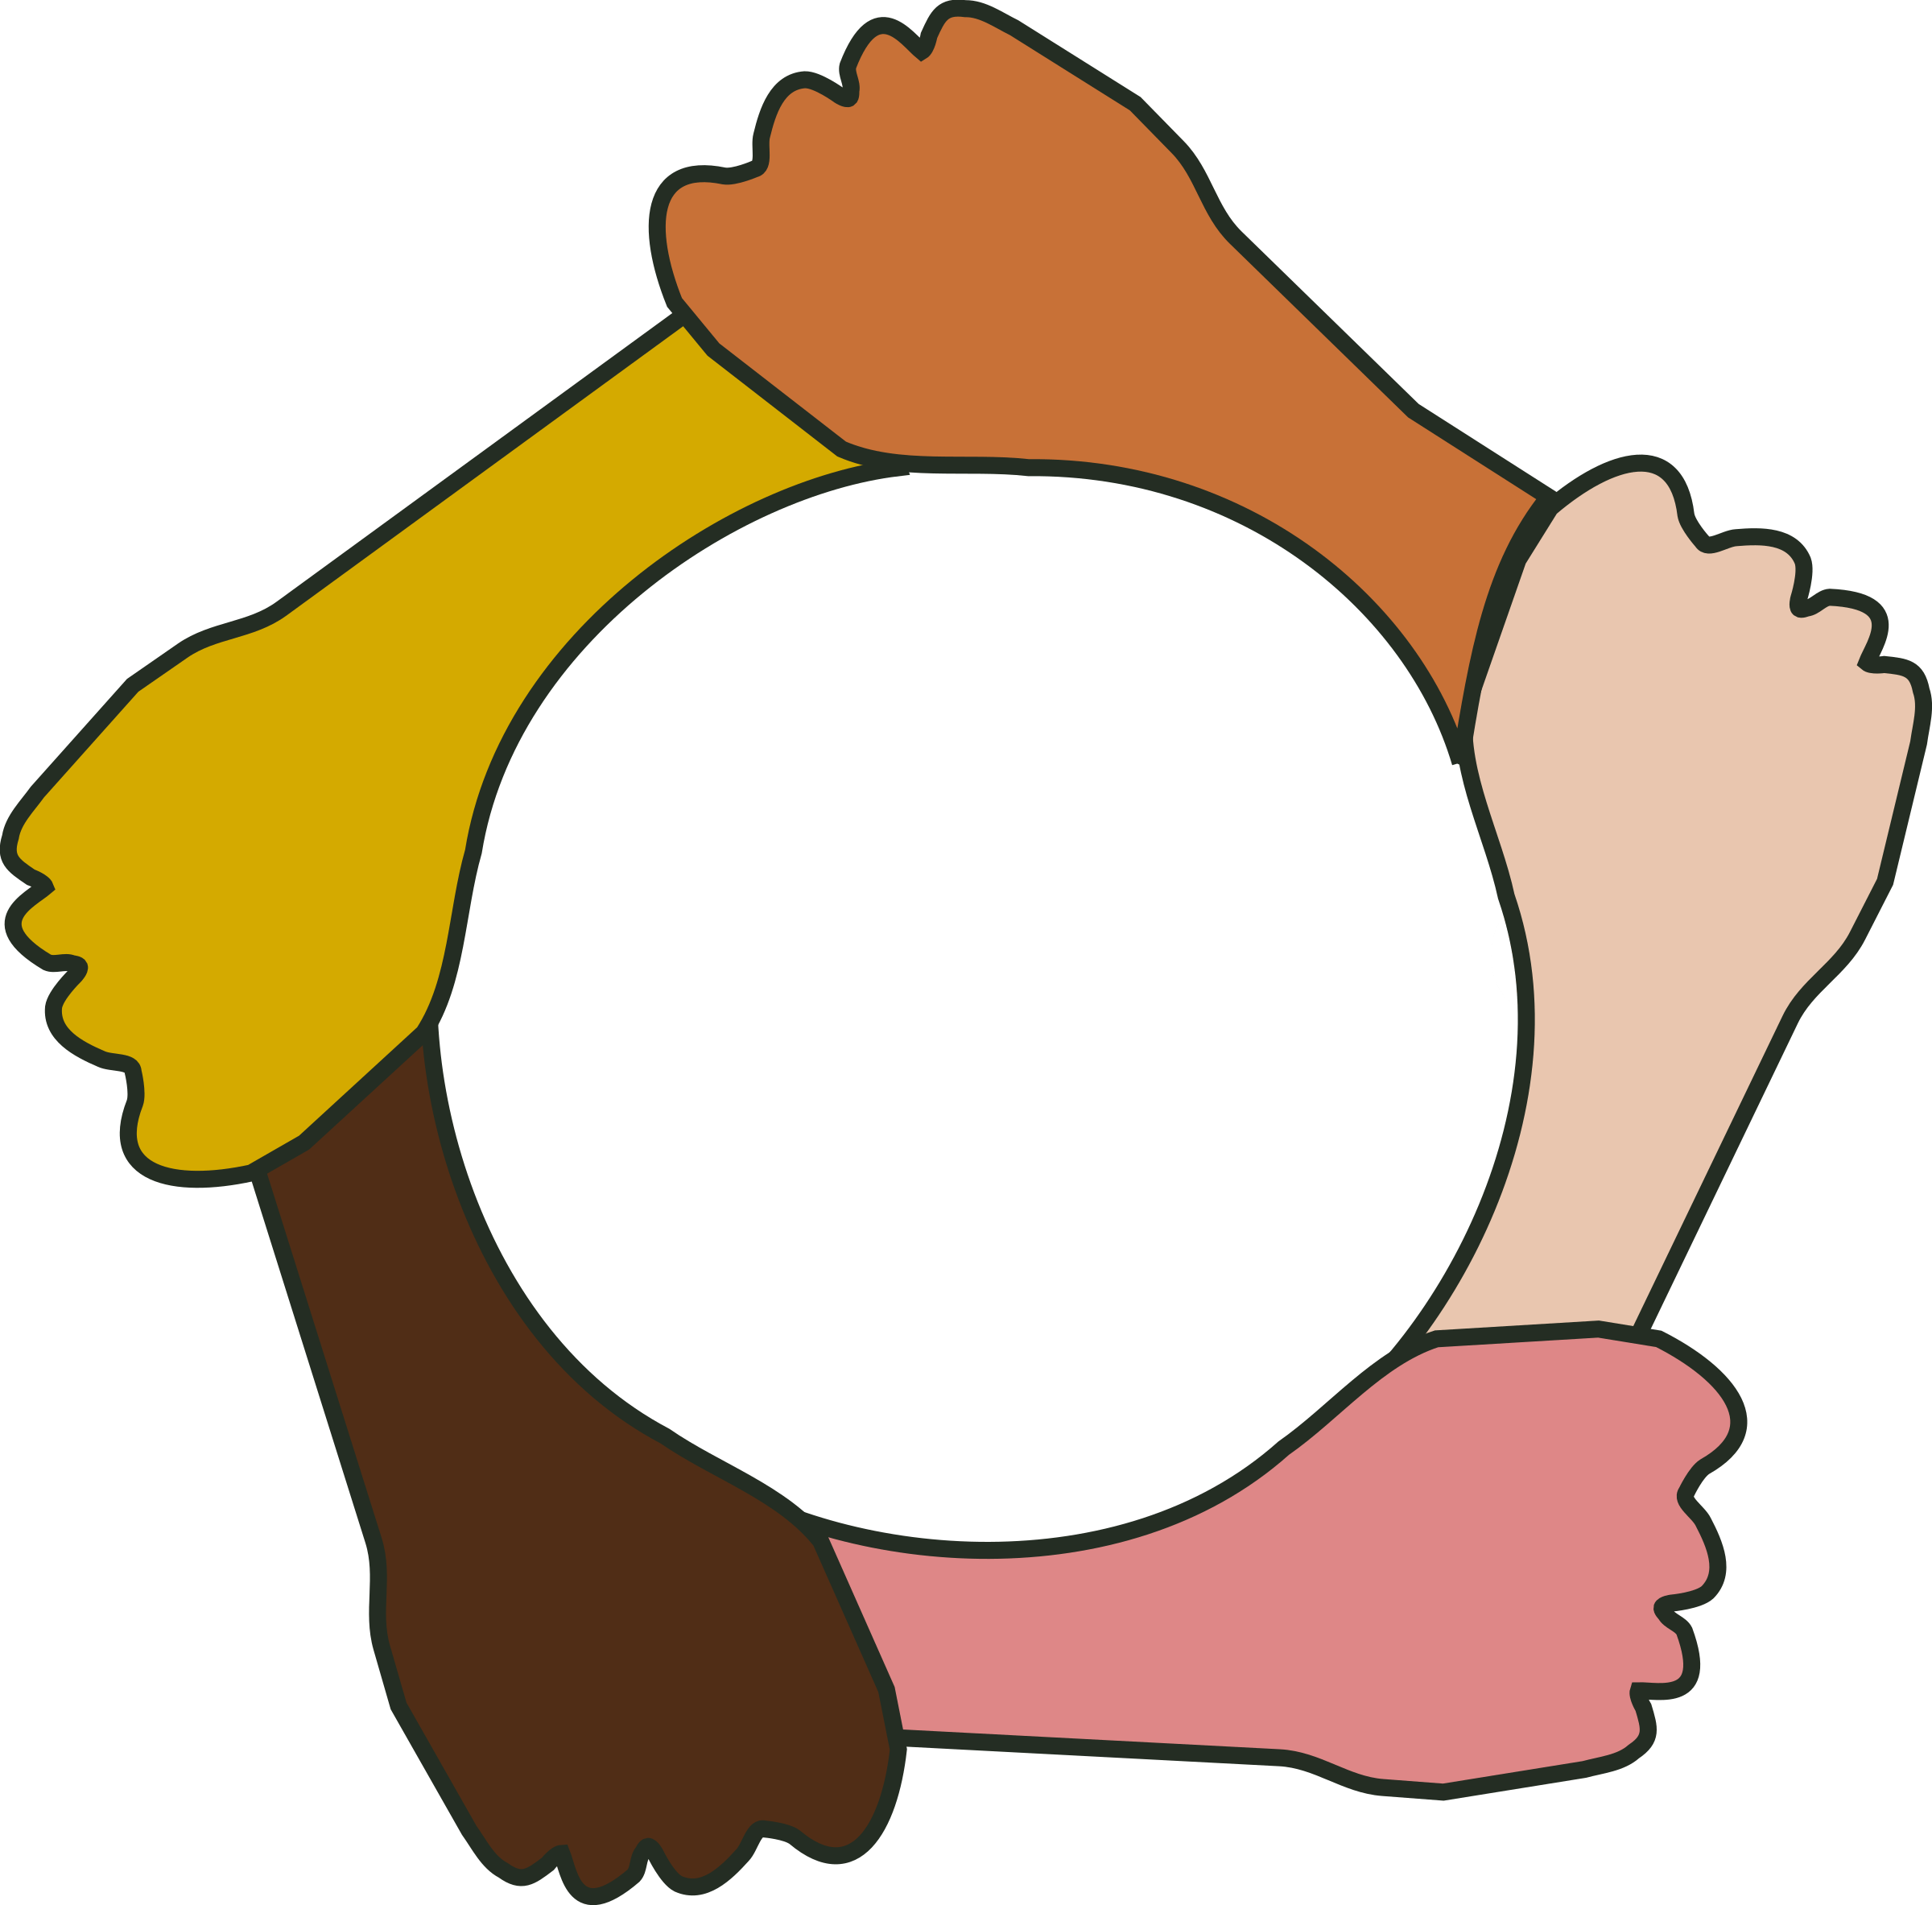 Circle of Hands Logo - Clipart - circle of hands